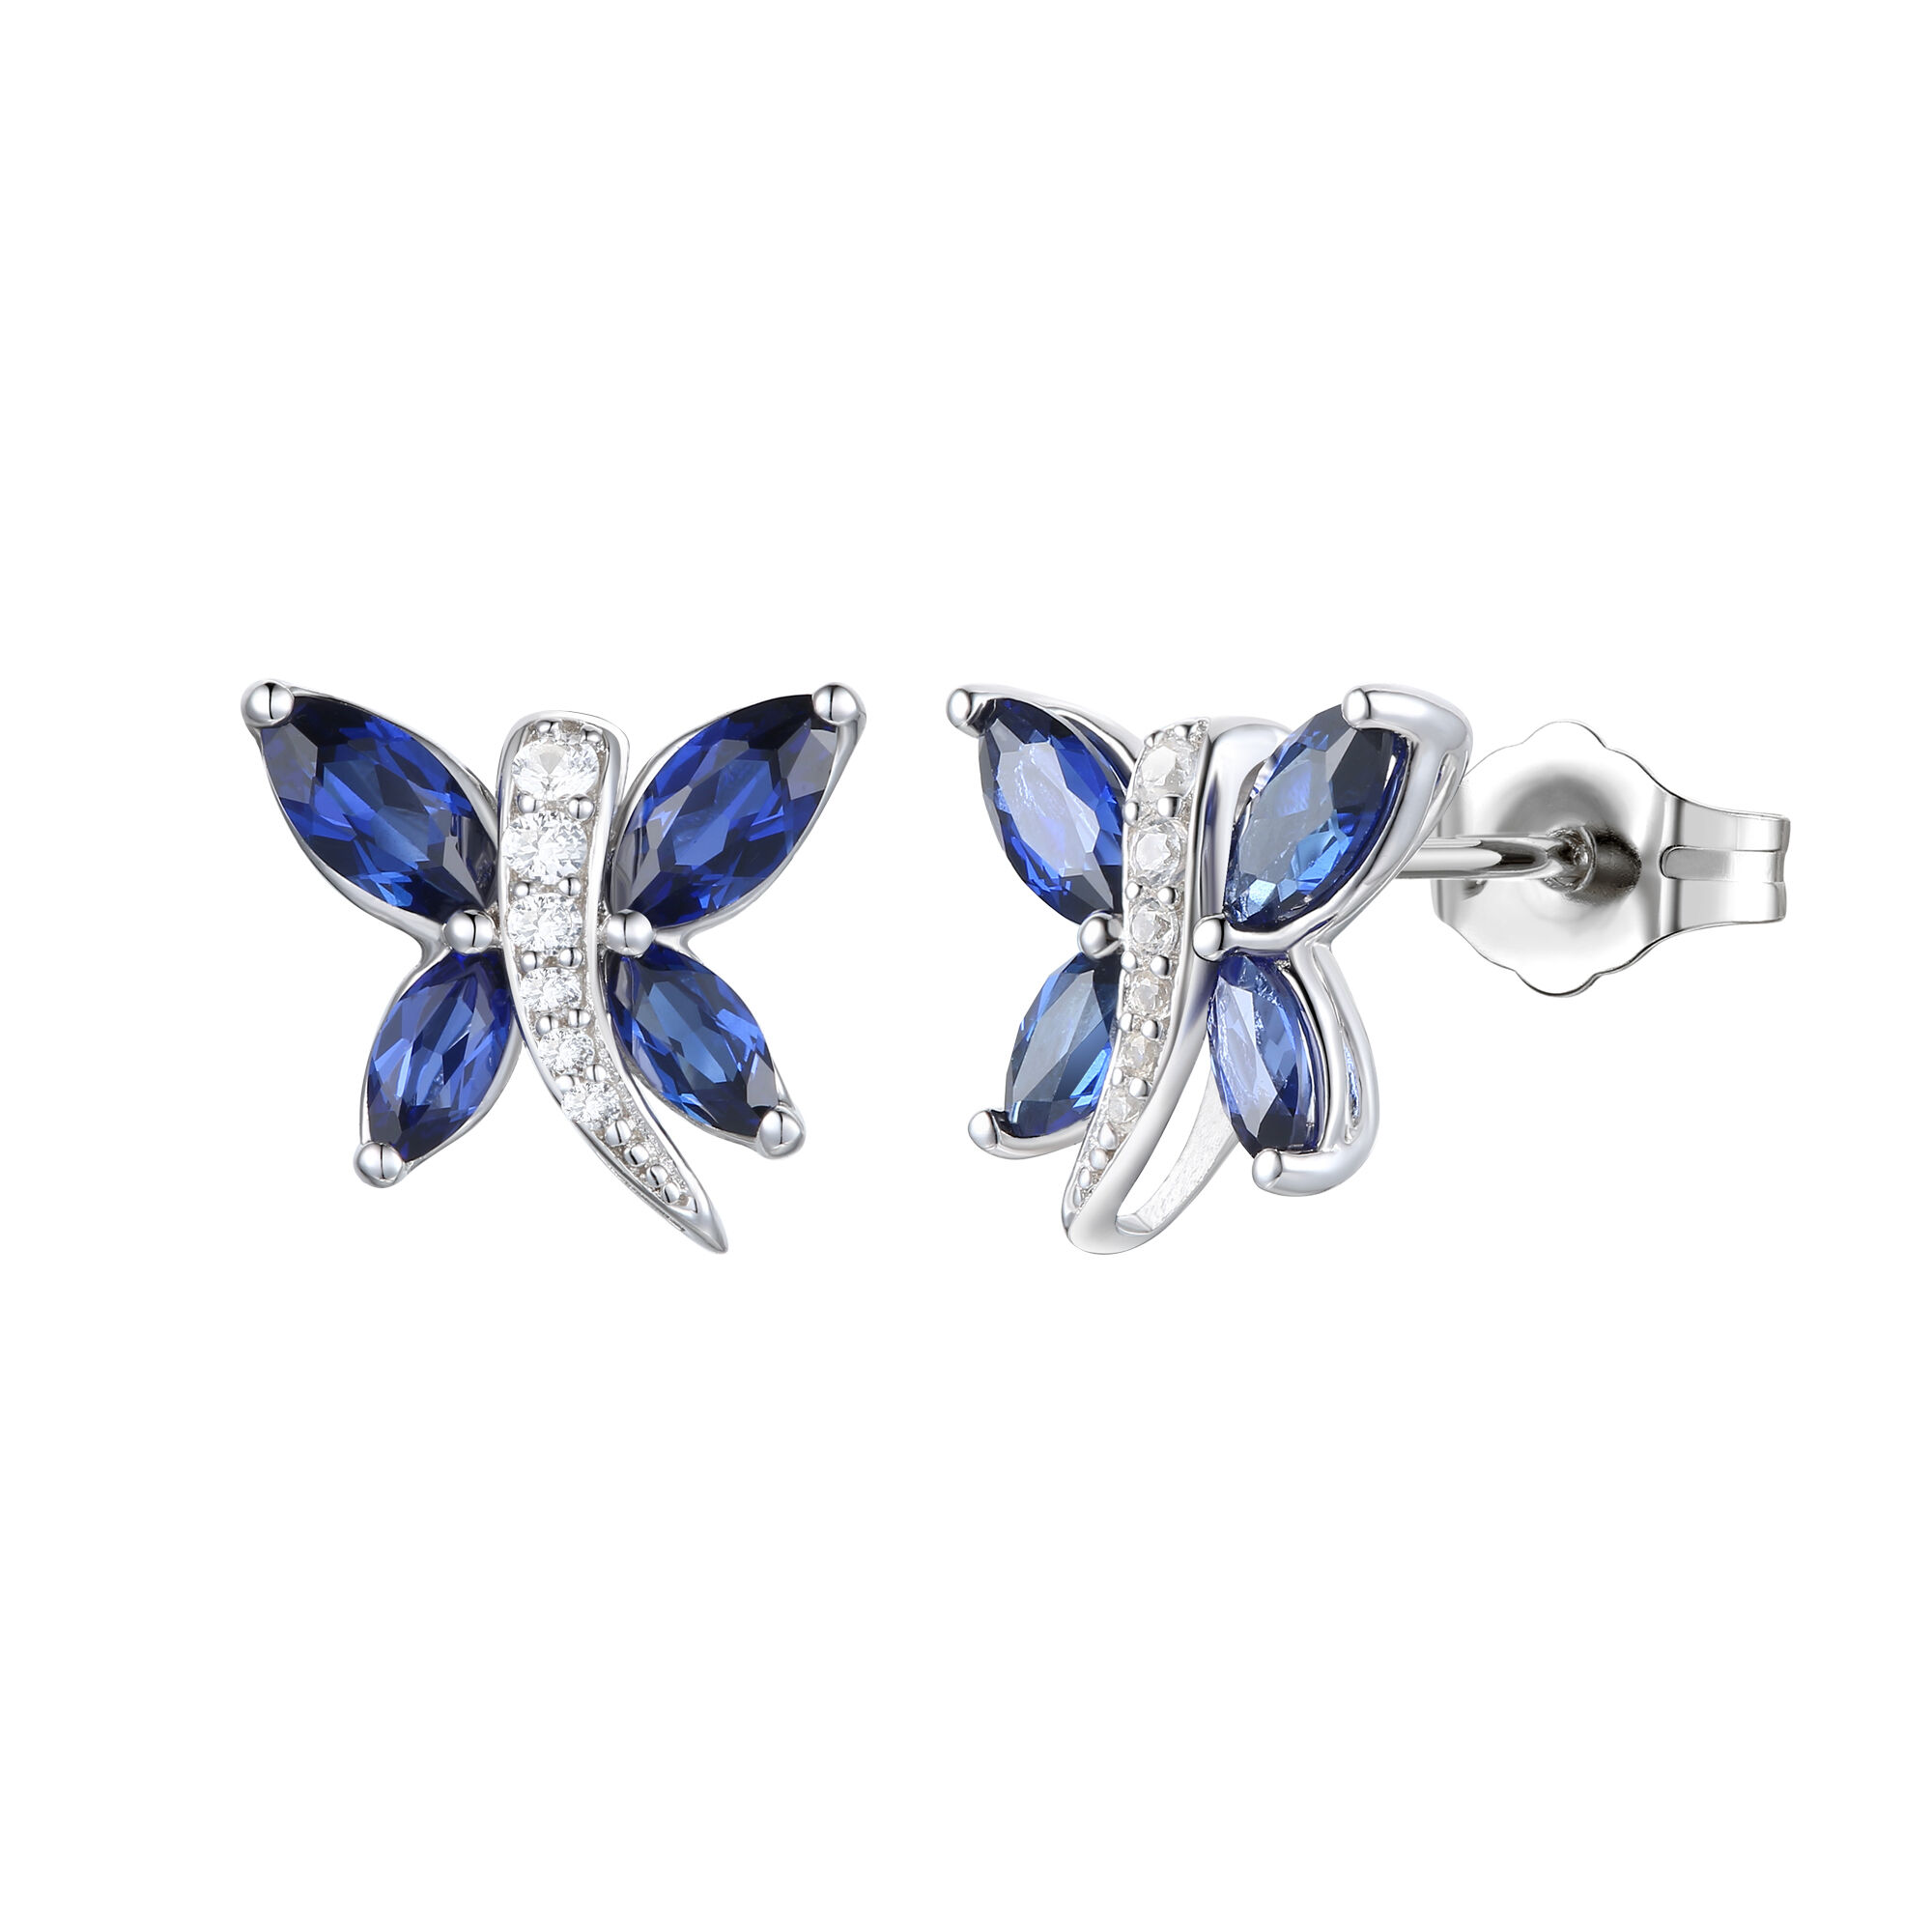 Buy Silver-Toned & Blue Earrings for Women by Yellow Chimes Online |  Ajio.com